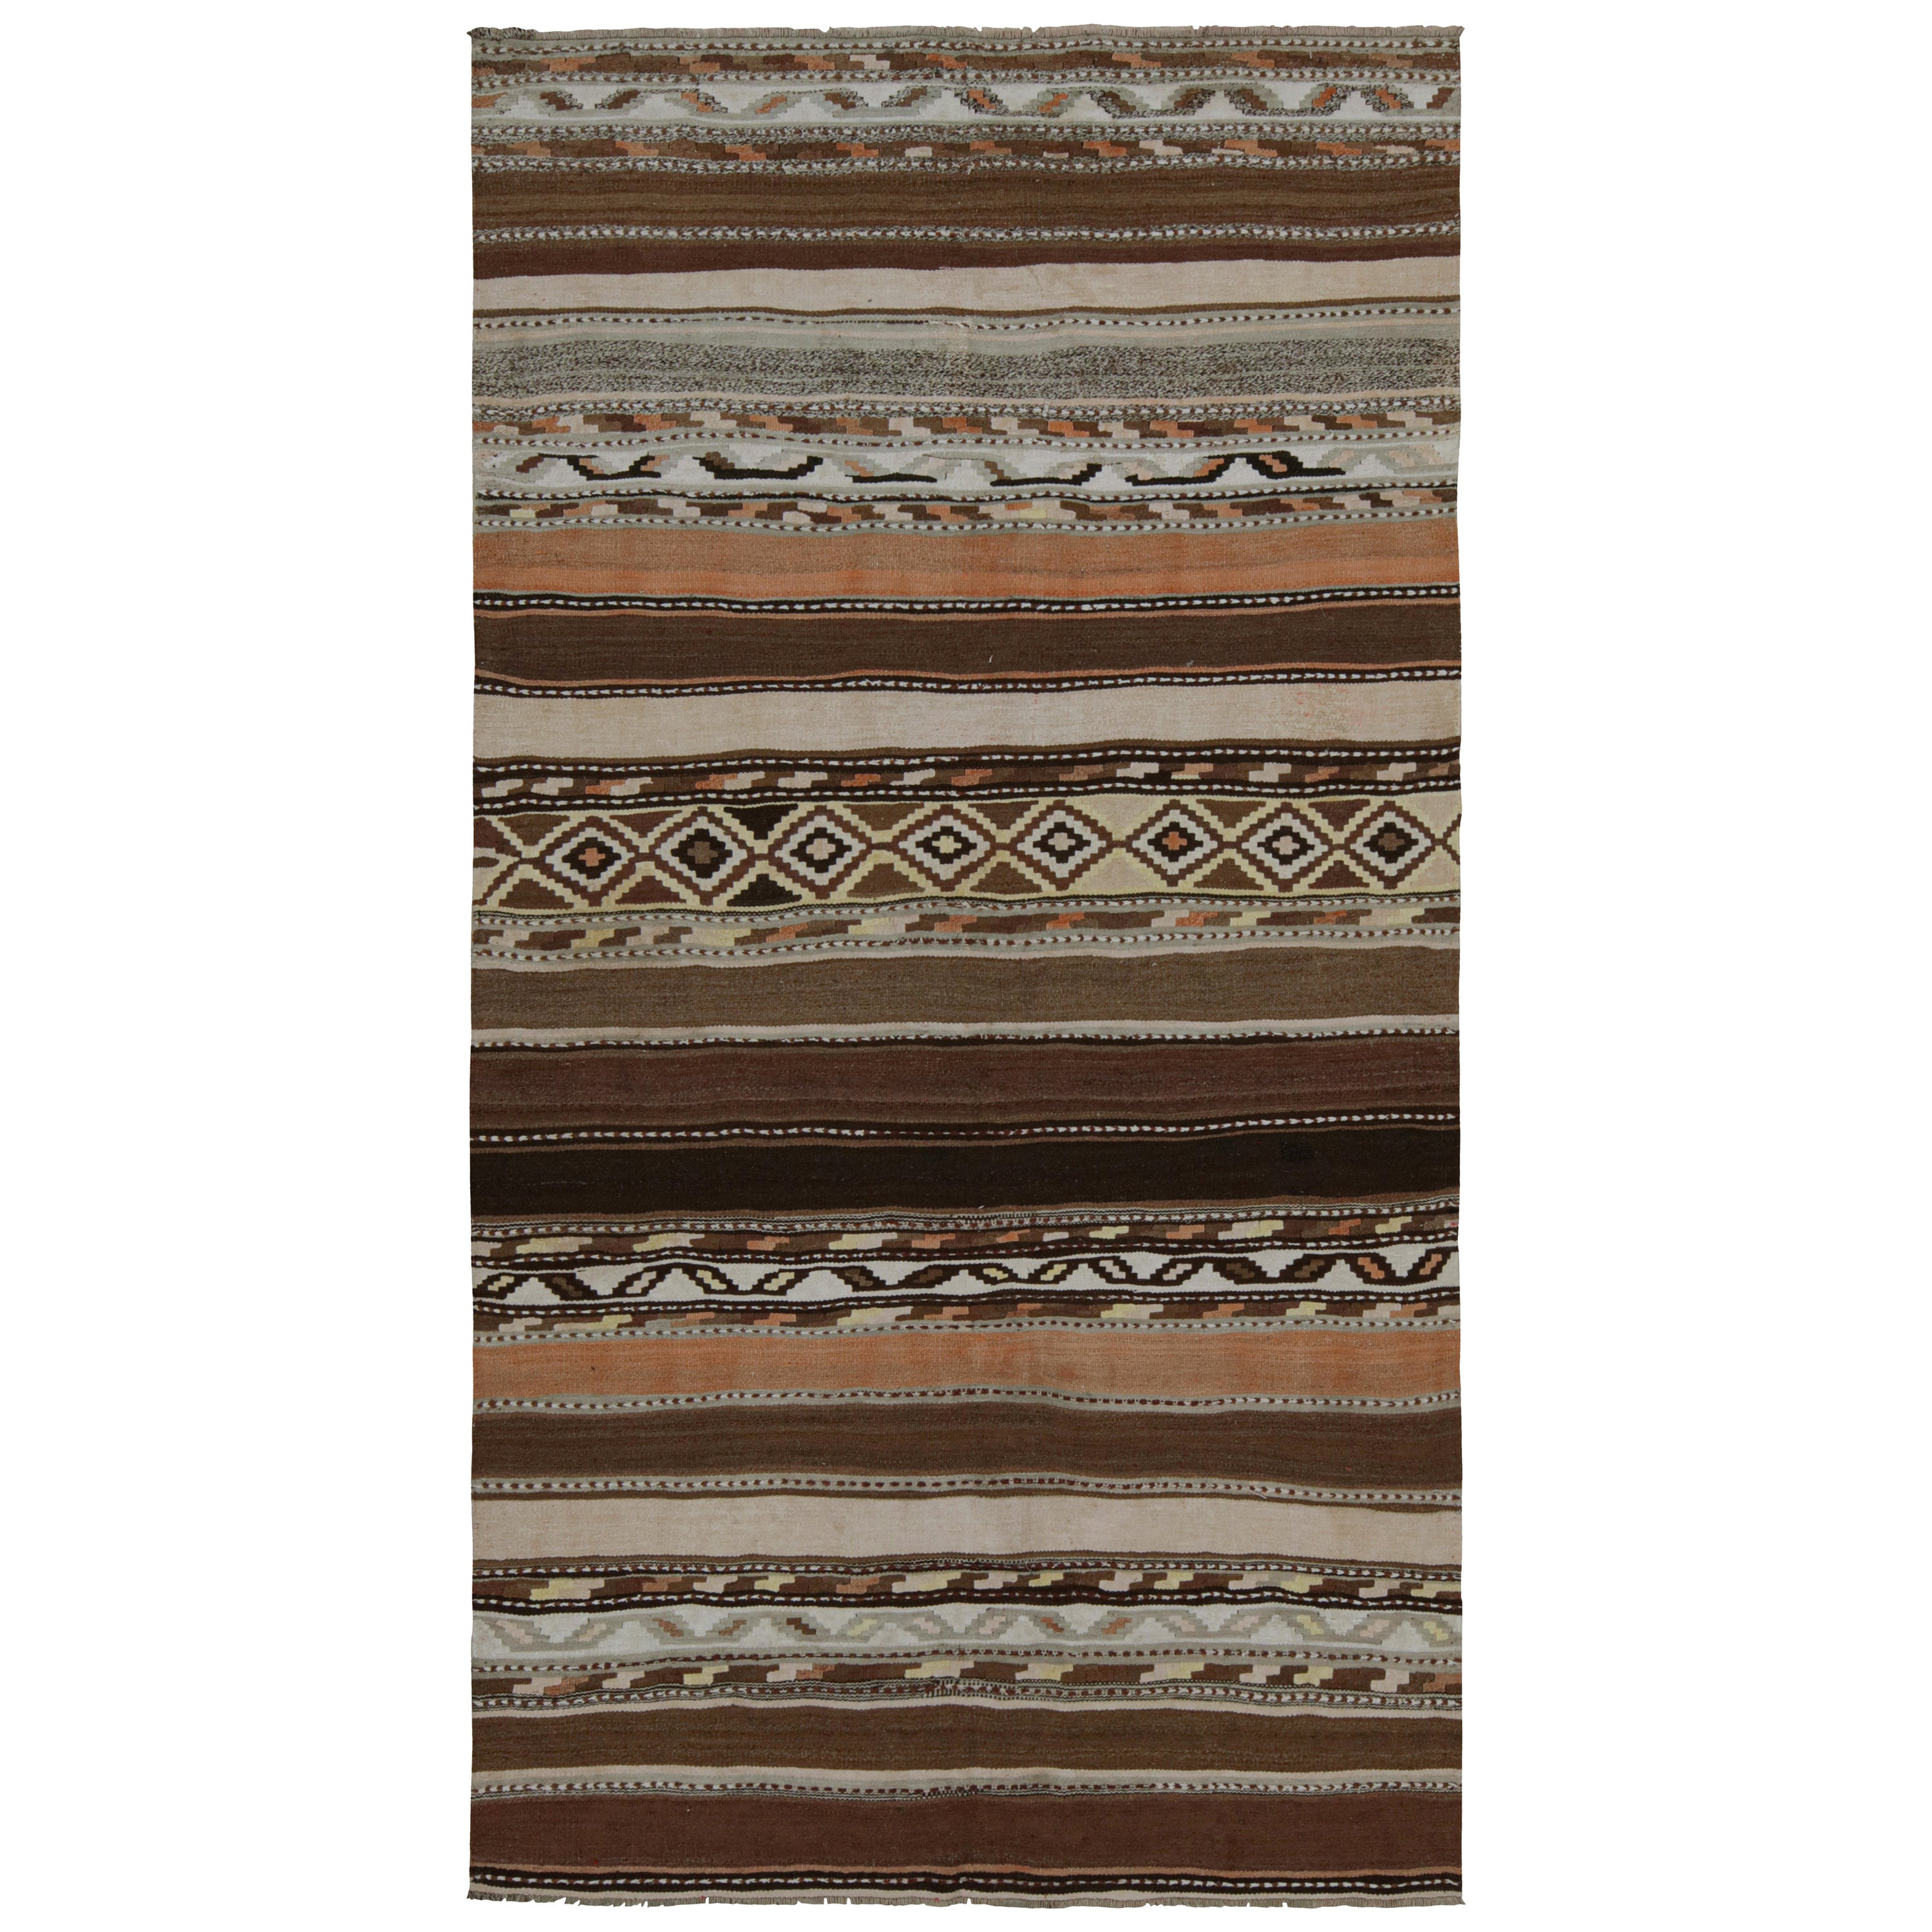 Vintage Persian tribal Kilim rug, with Geometric Stripes, from Rug & Kilim